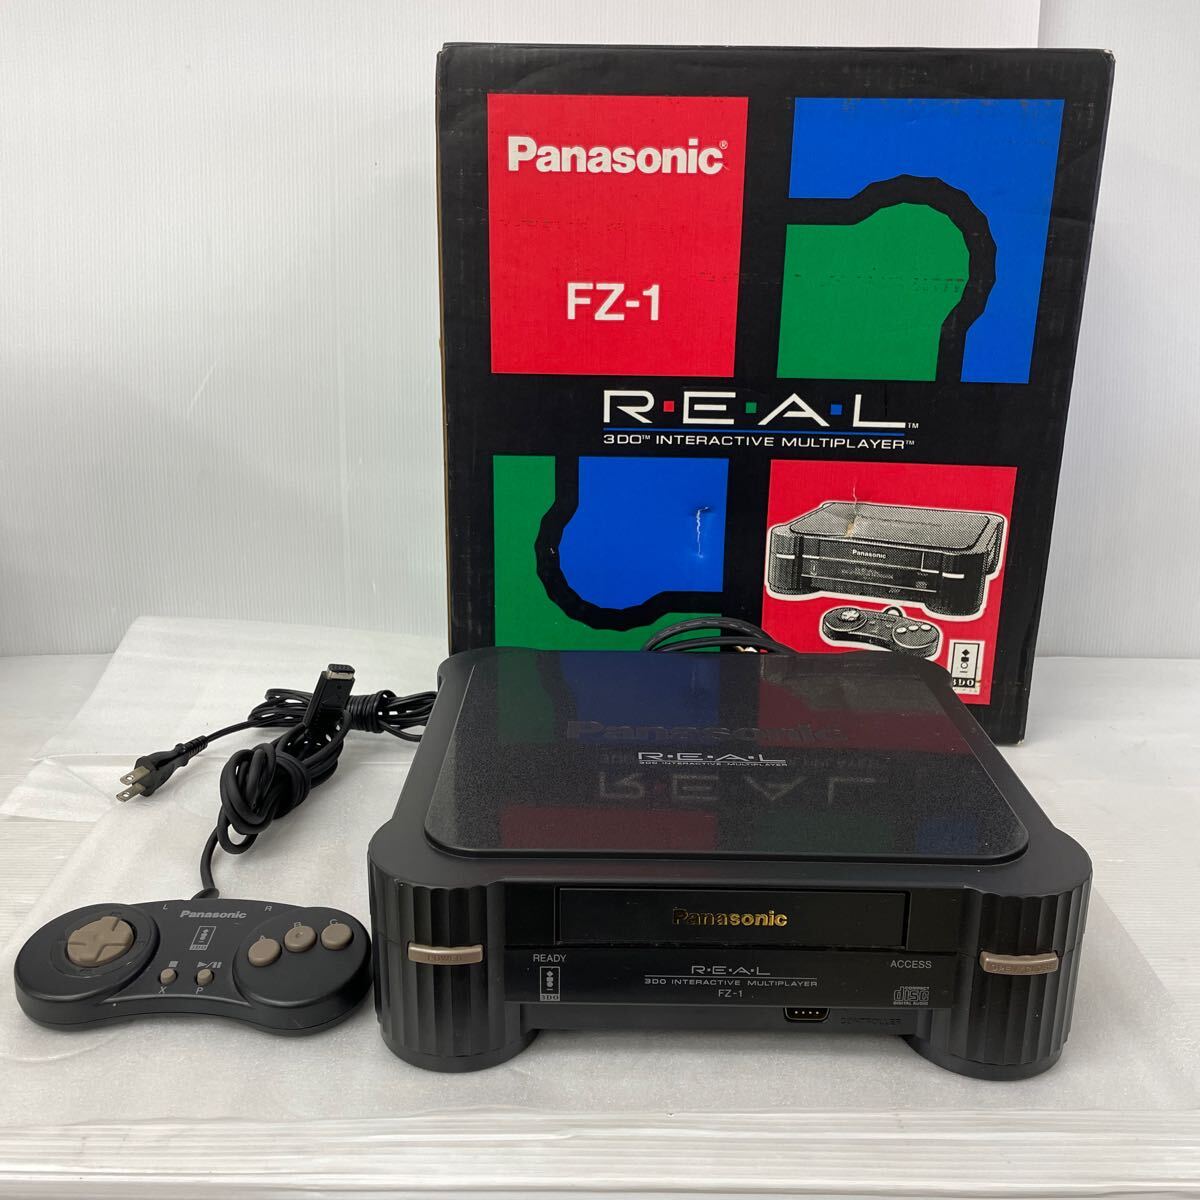 Panasonic FZ-1 INTRACTIVE MULTIPLAYER 3DO REAL ゲーム機 パナソニック インタラクティブの画像1